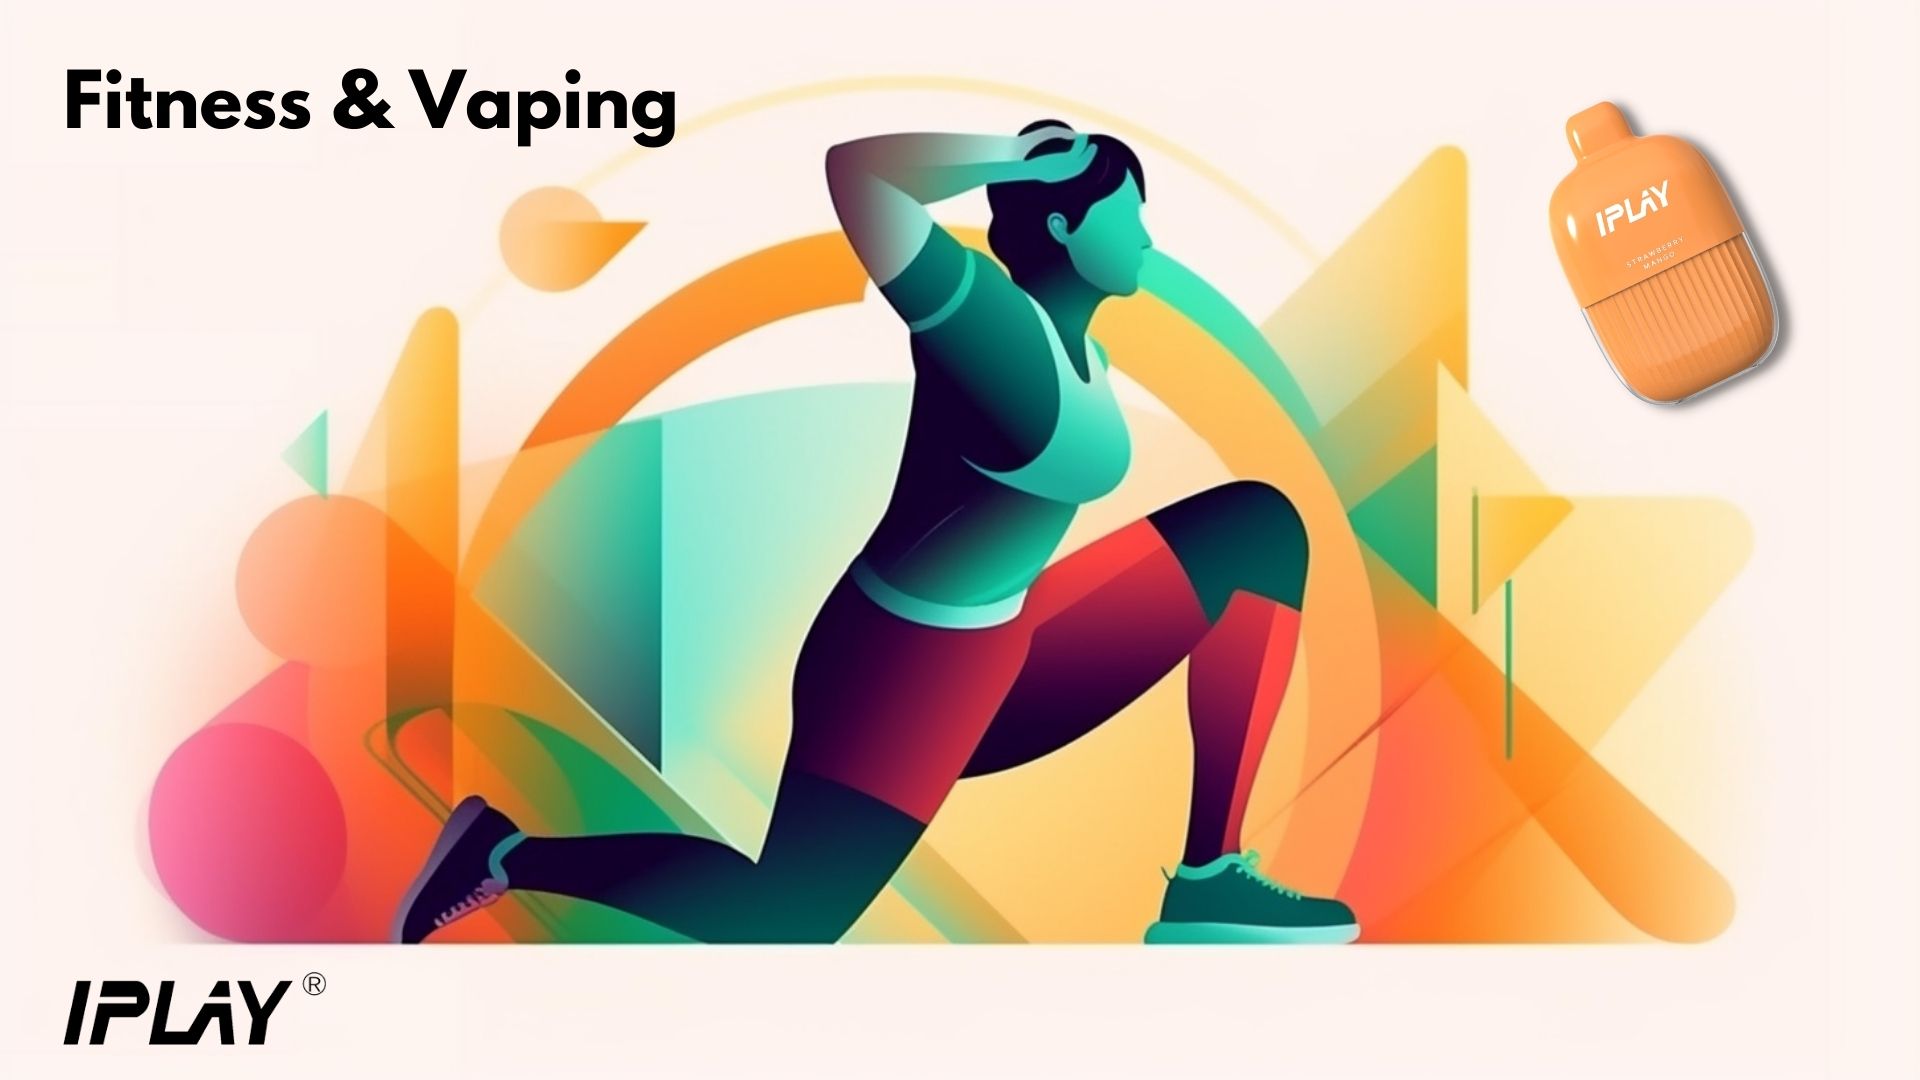 Вапинг һәм фитнес: Электрон сигаретлар һәм күнегүләр арасындагы бәйләнеш